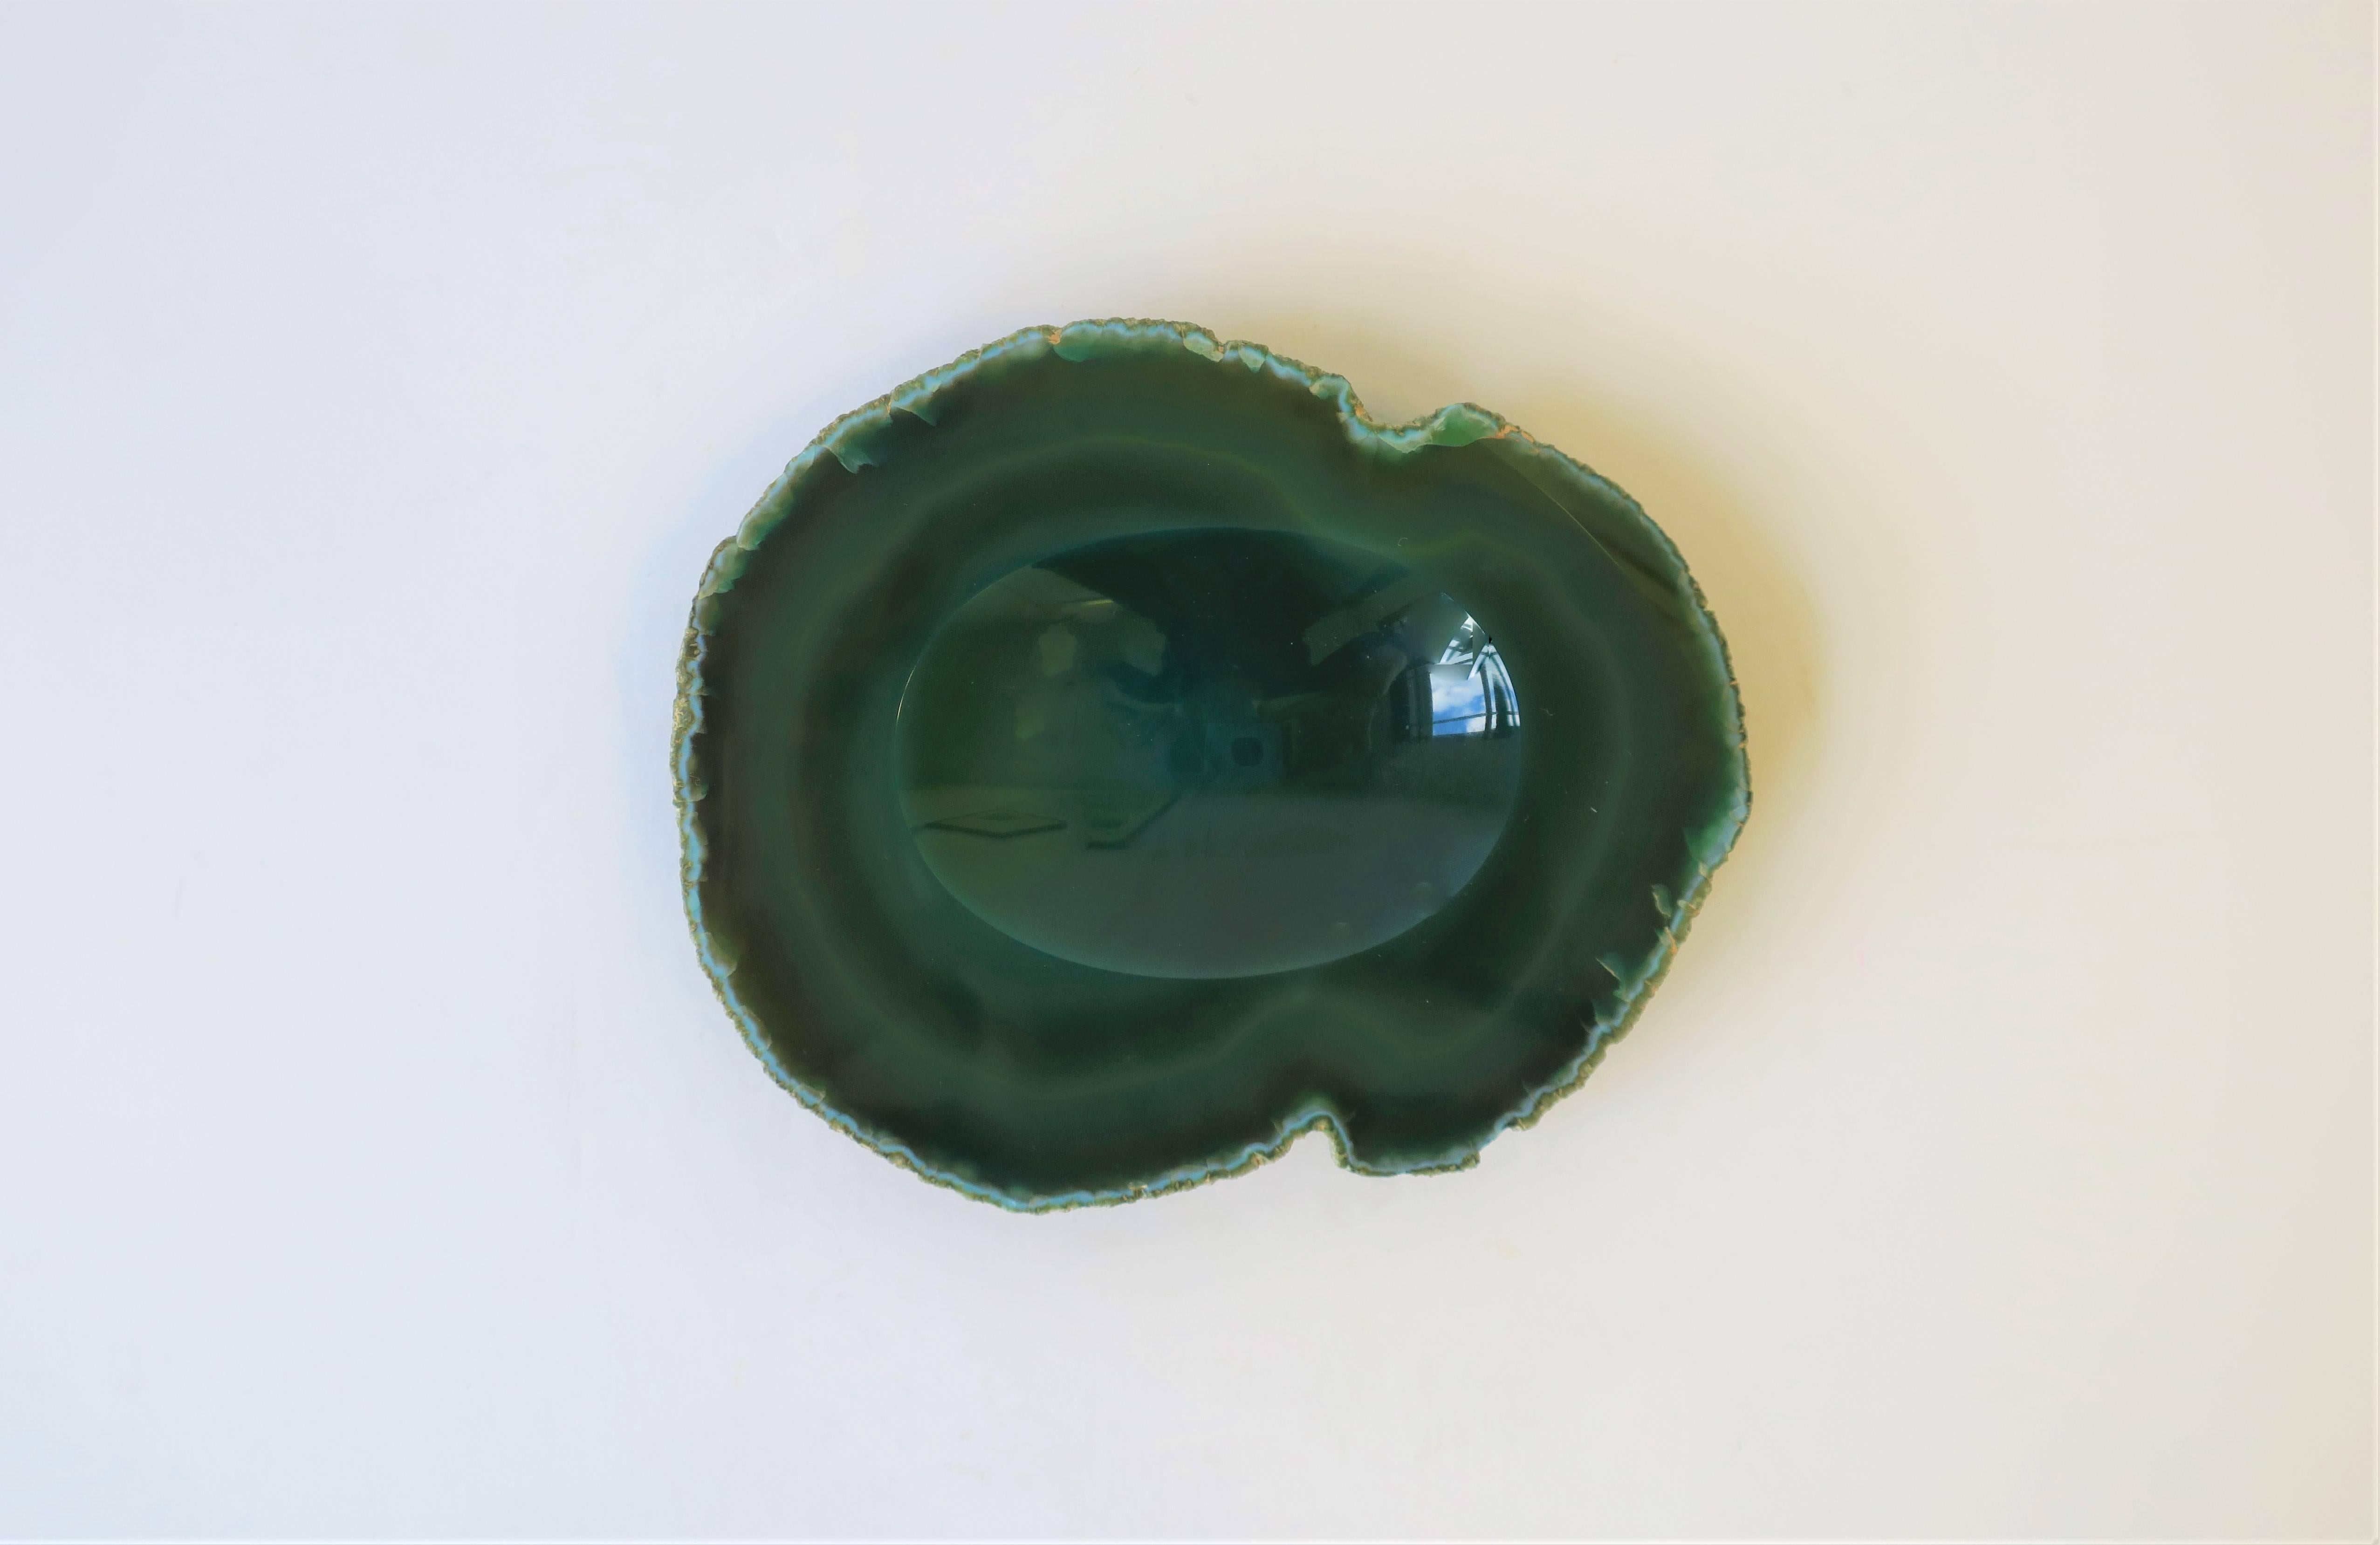 Organic Modern Vintage Emerald Green Agate Geode Vessel Bowl or Decorative Object